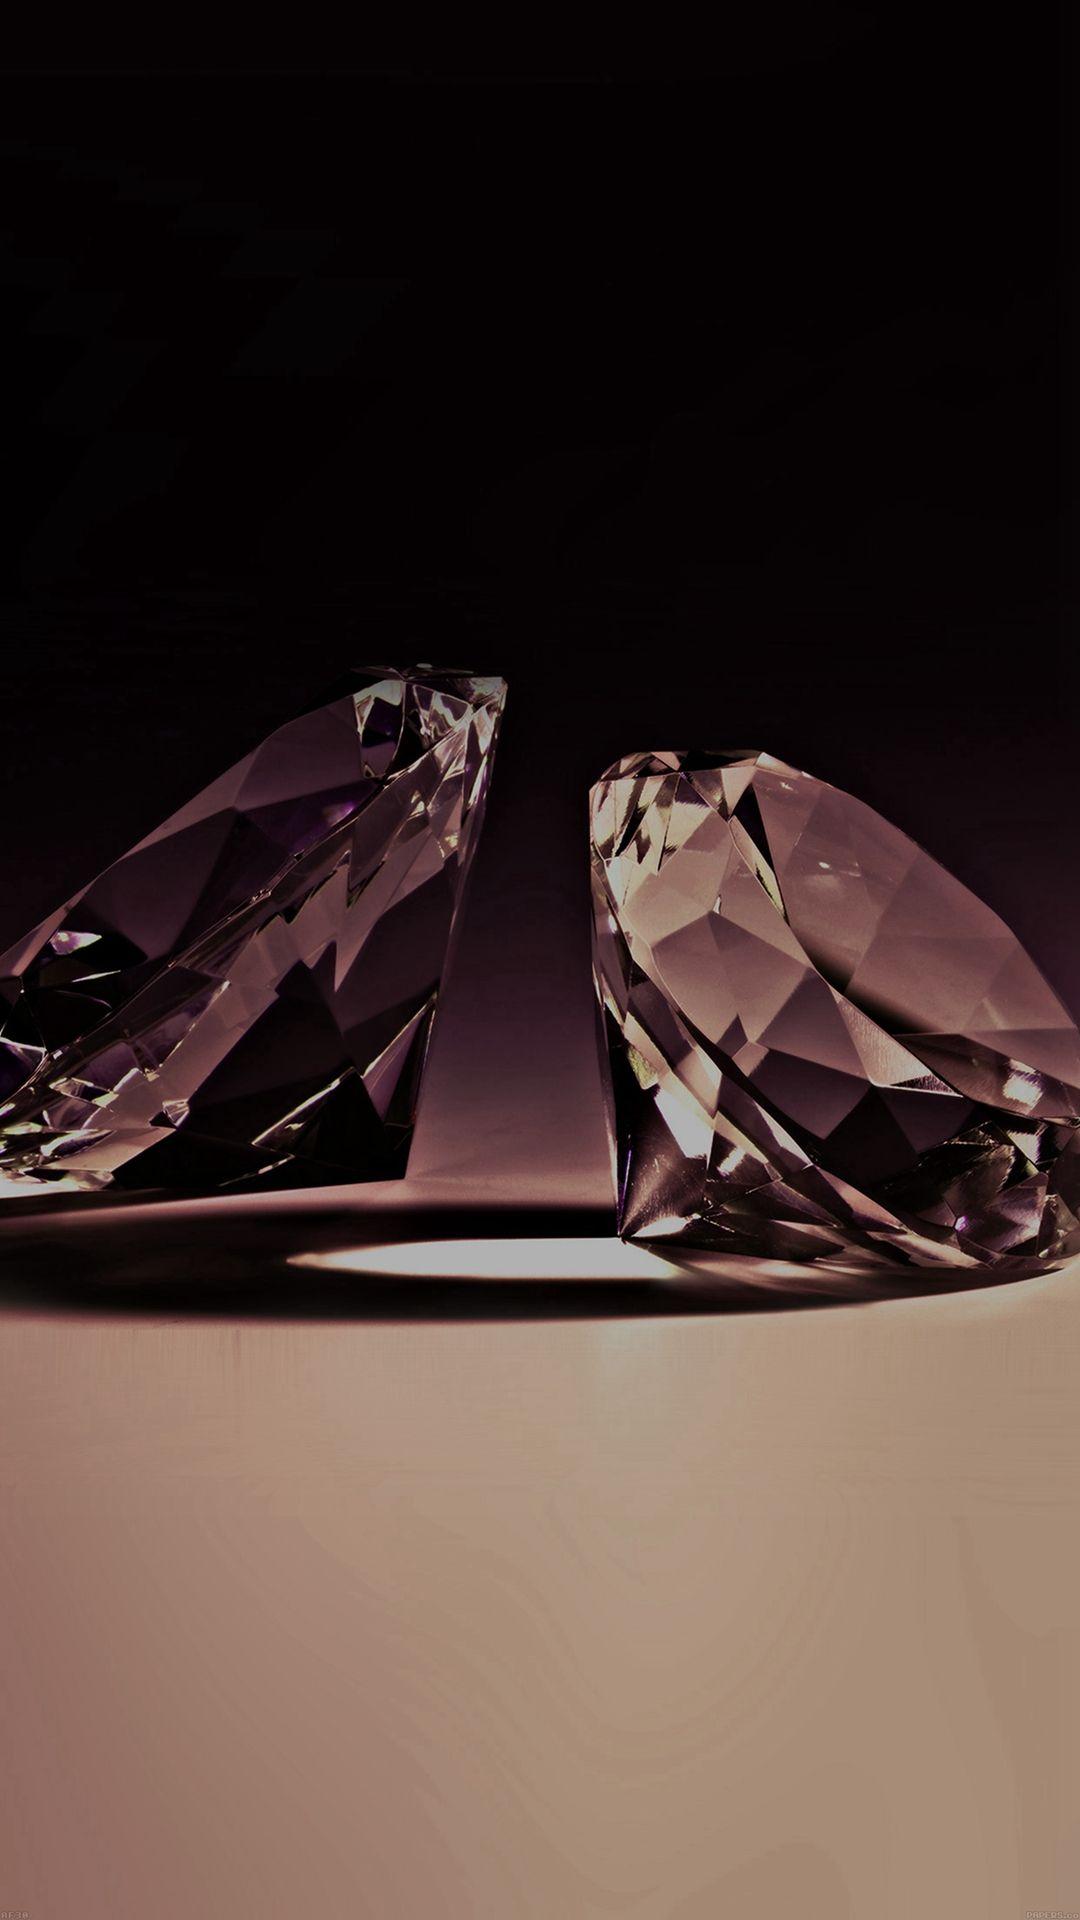 Two diamonds wide HD iphone 6 wallpaper photo free